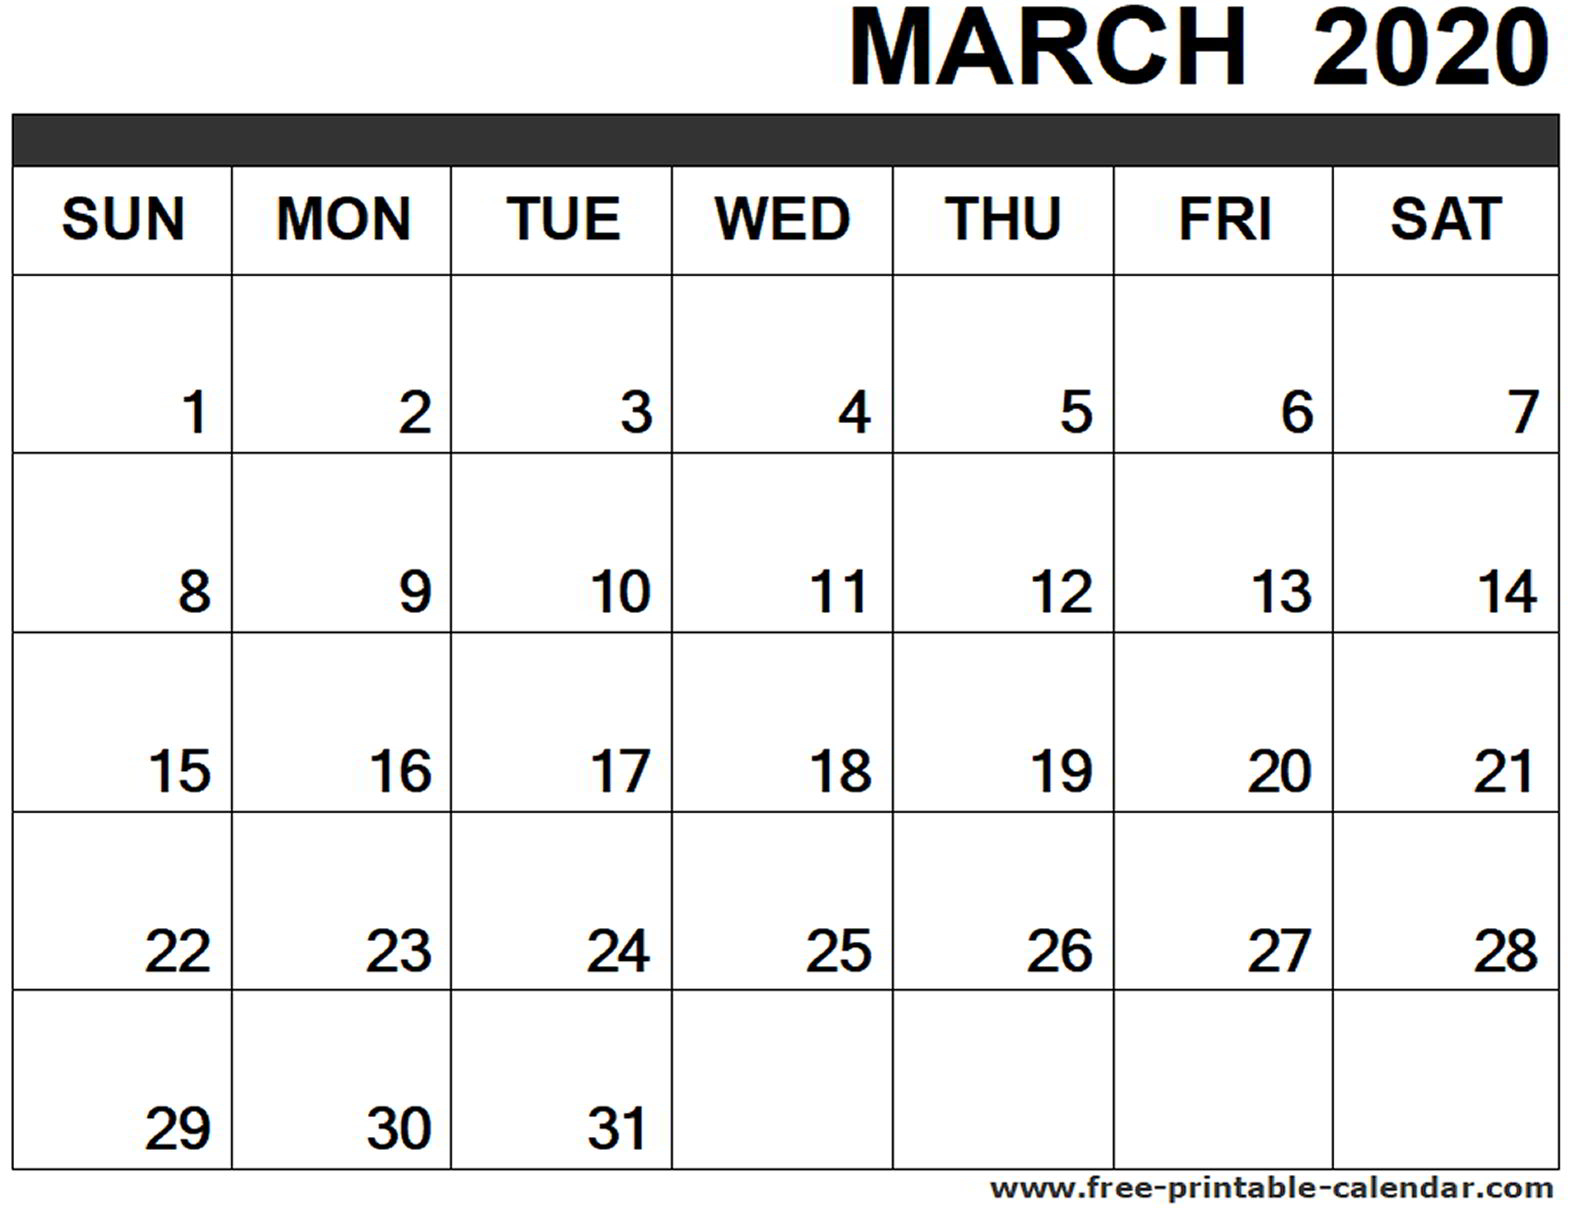 March 2020 Calendar Printable - Free-Printable-Calendar